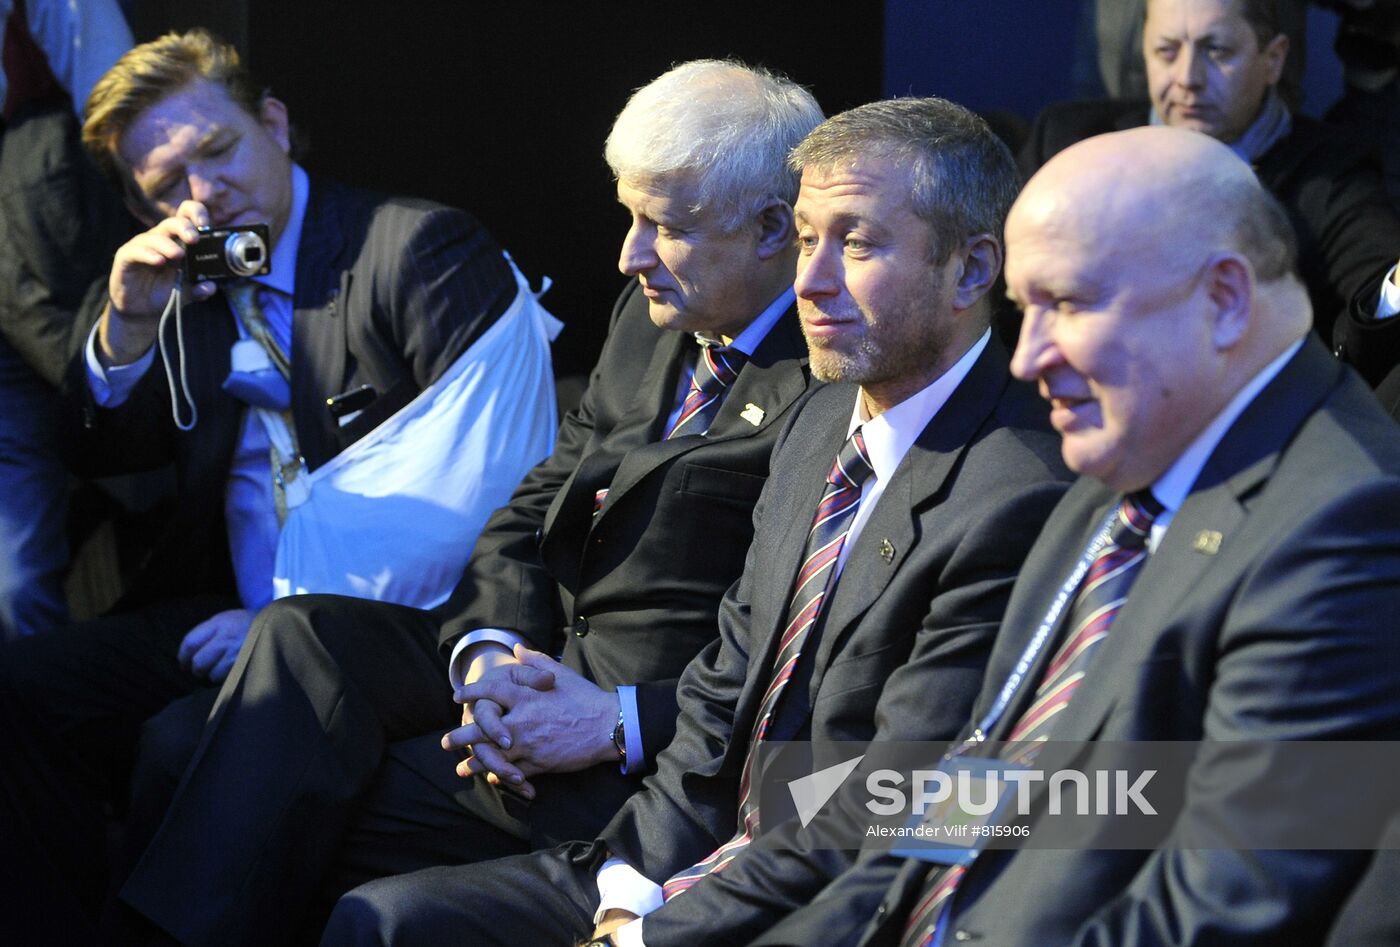 Roman Abramovich, Sergei Fursenko and Valery Shantsev